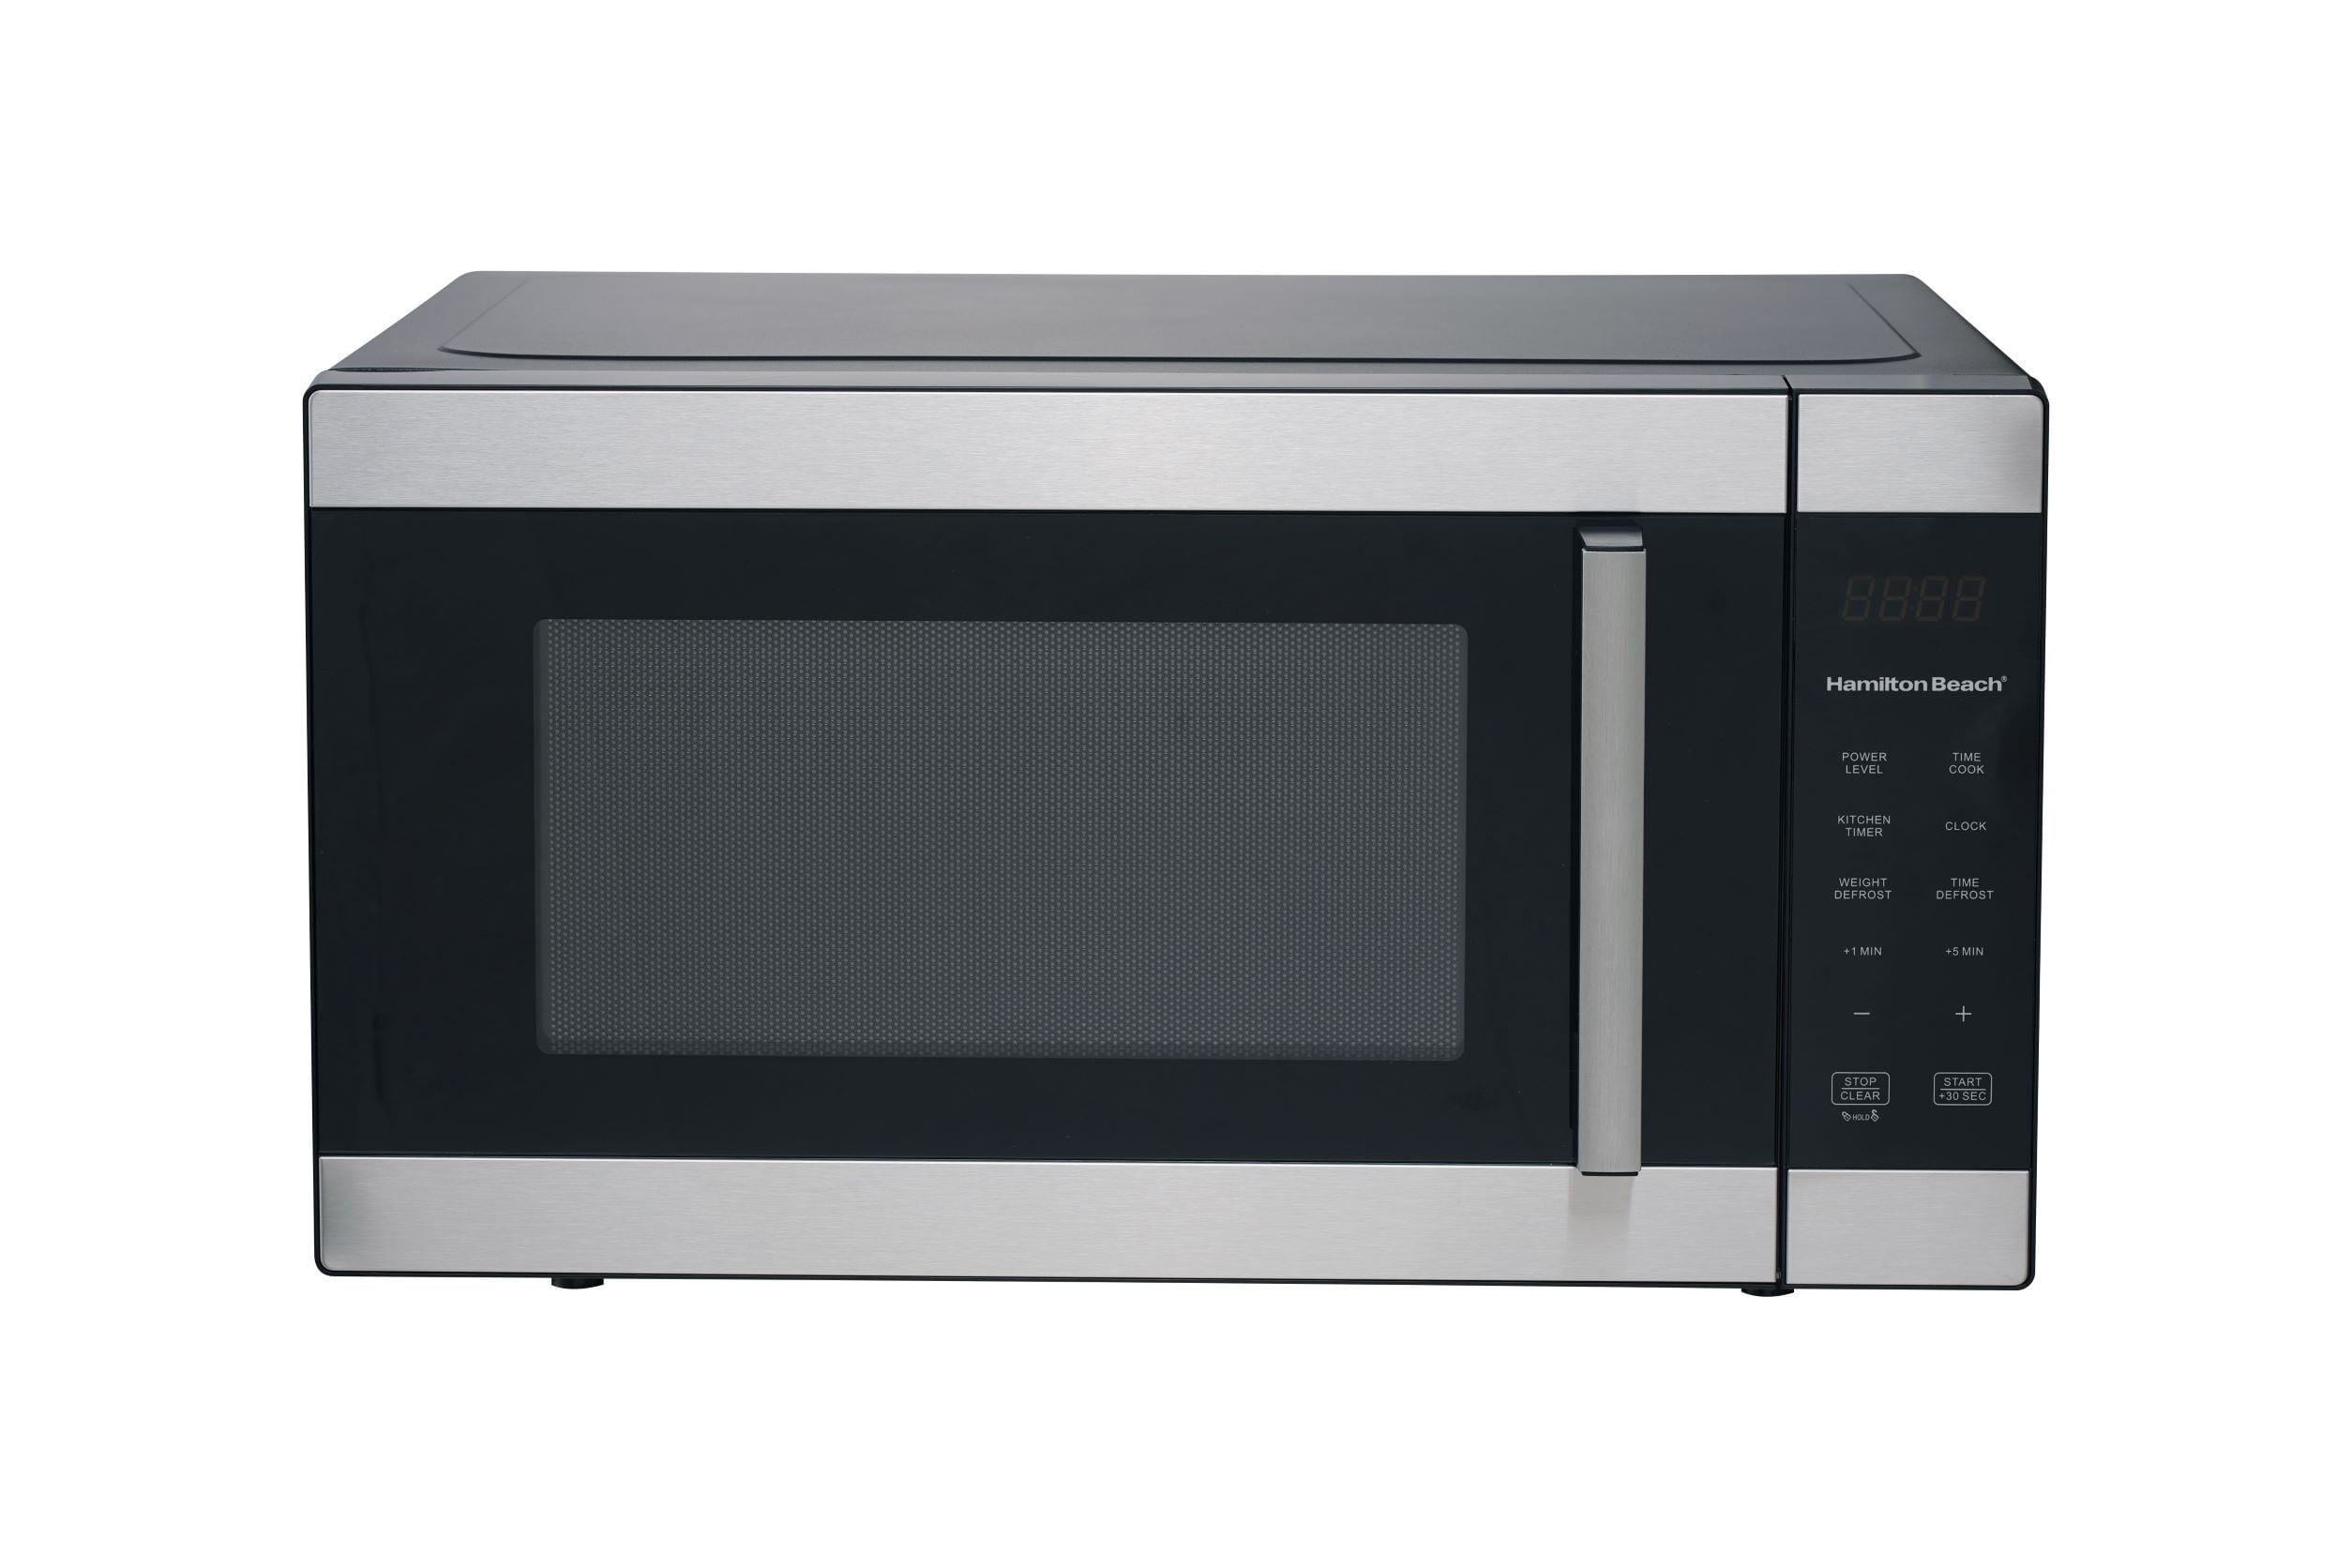 5pcs 5KV 0.85A 850mA Microwave Oven High Voltage Fuses Fuse Holder